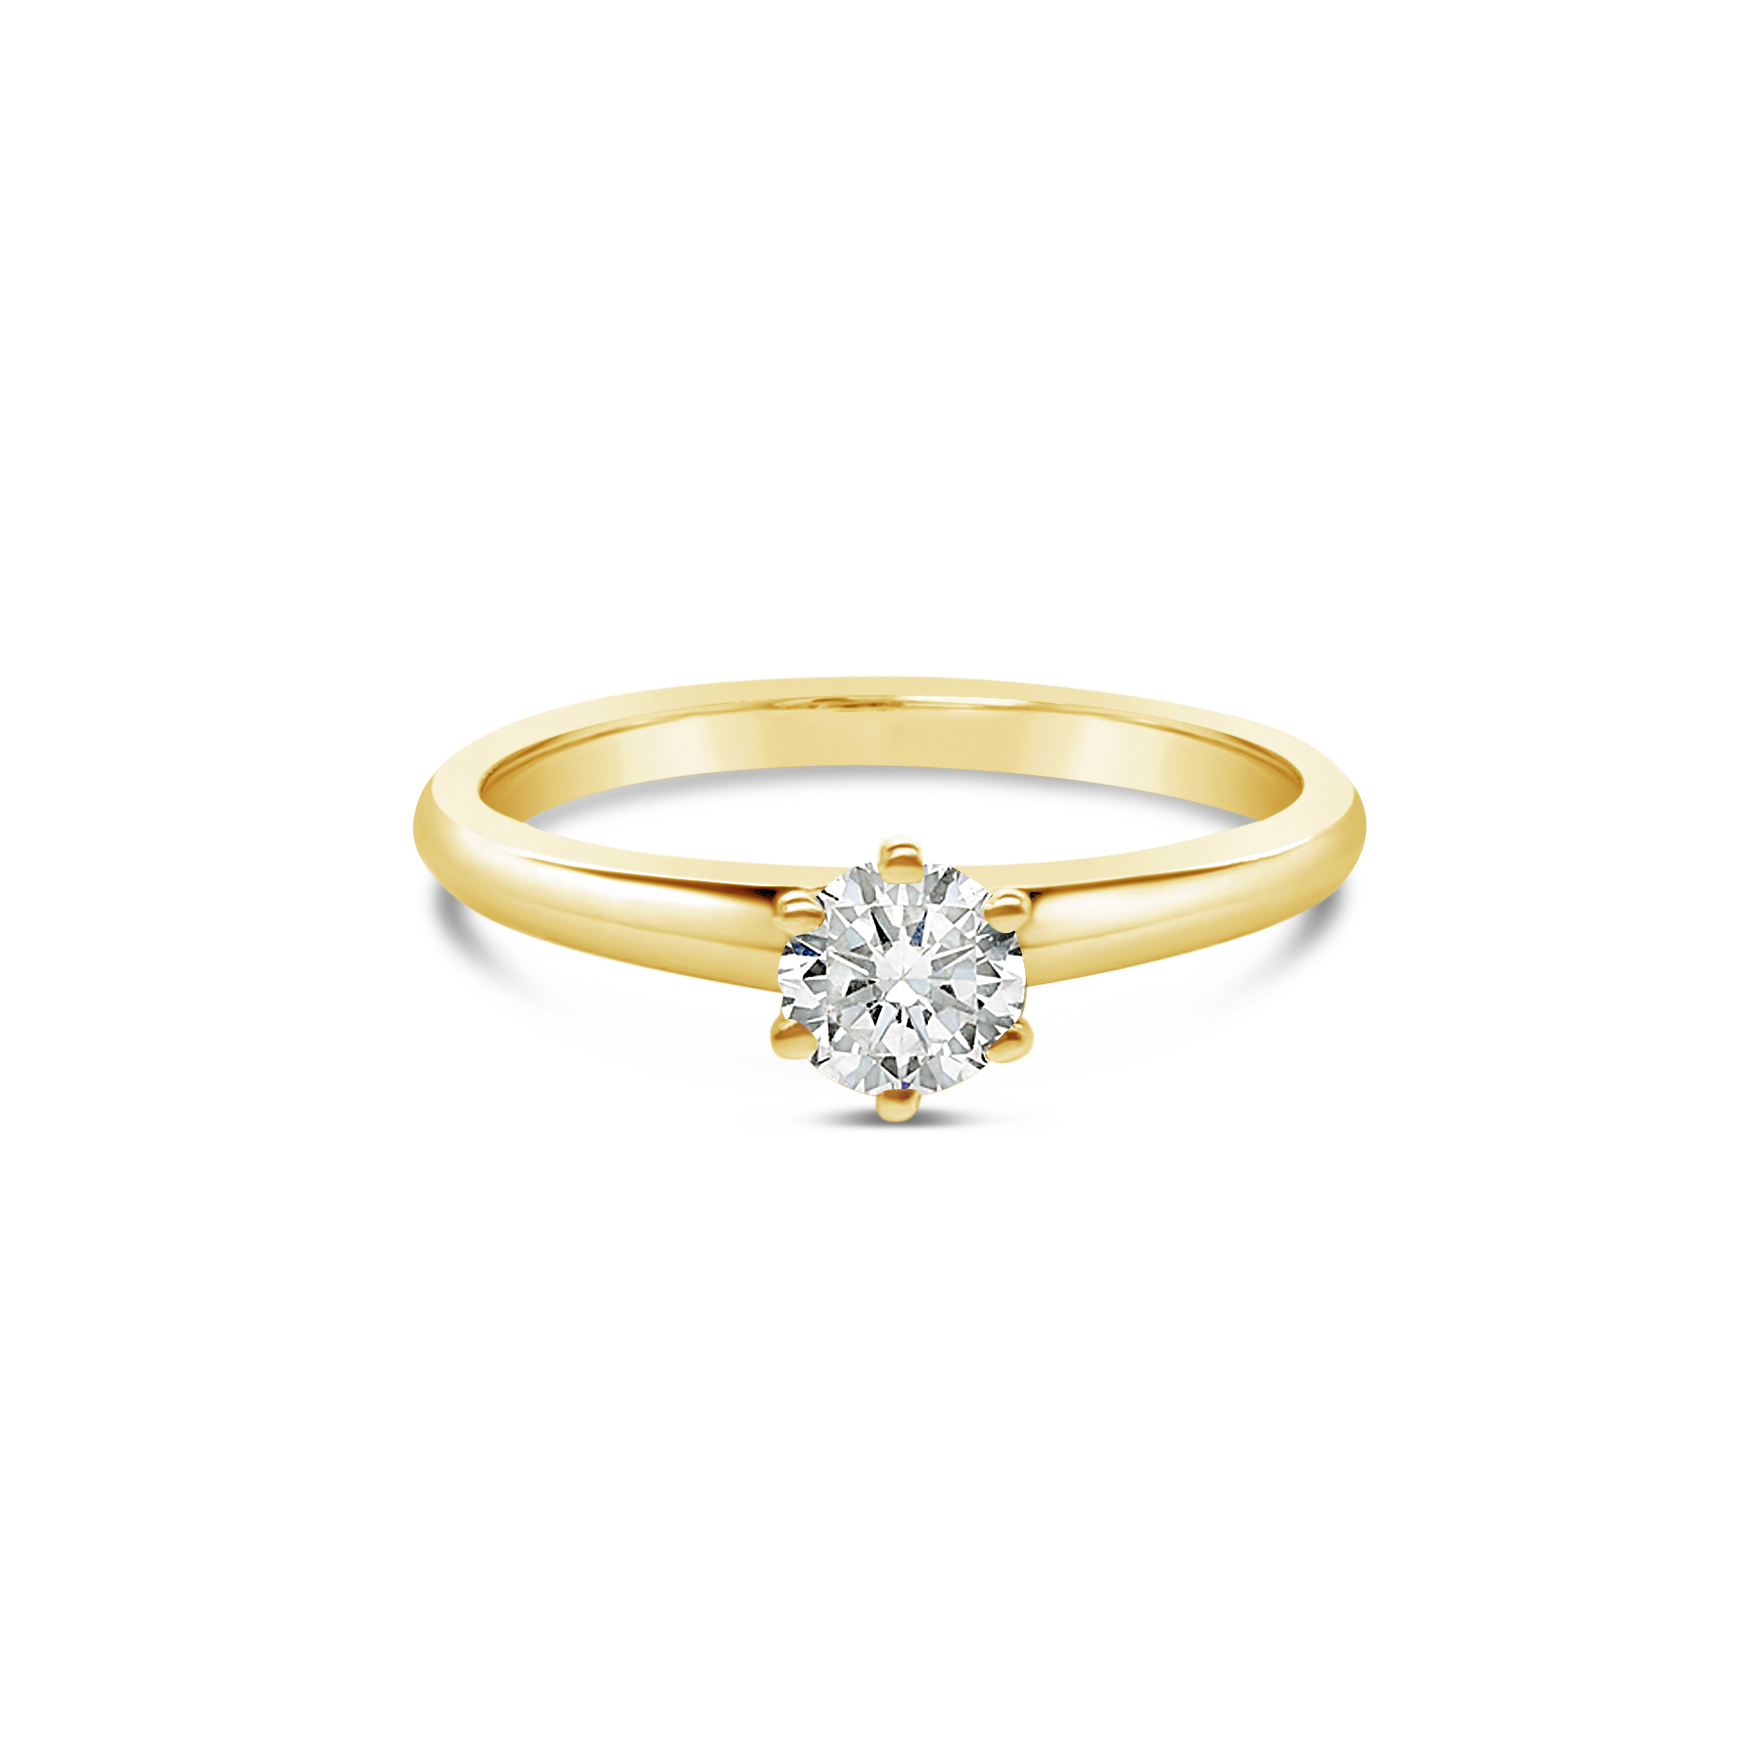 Delightful zlatni prsten s dijamantom